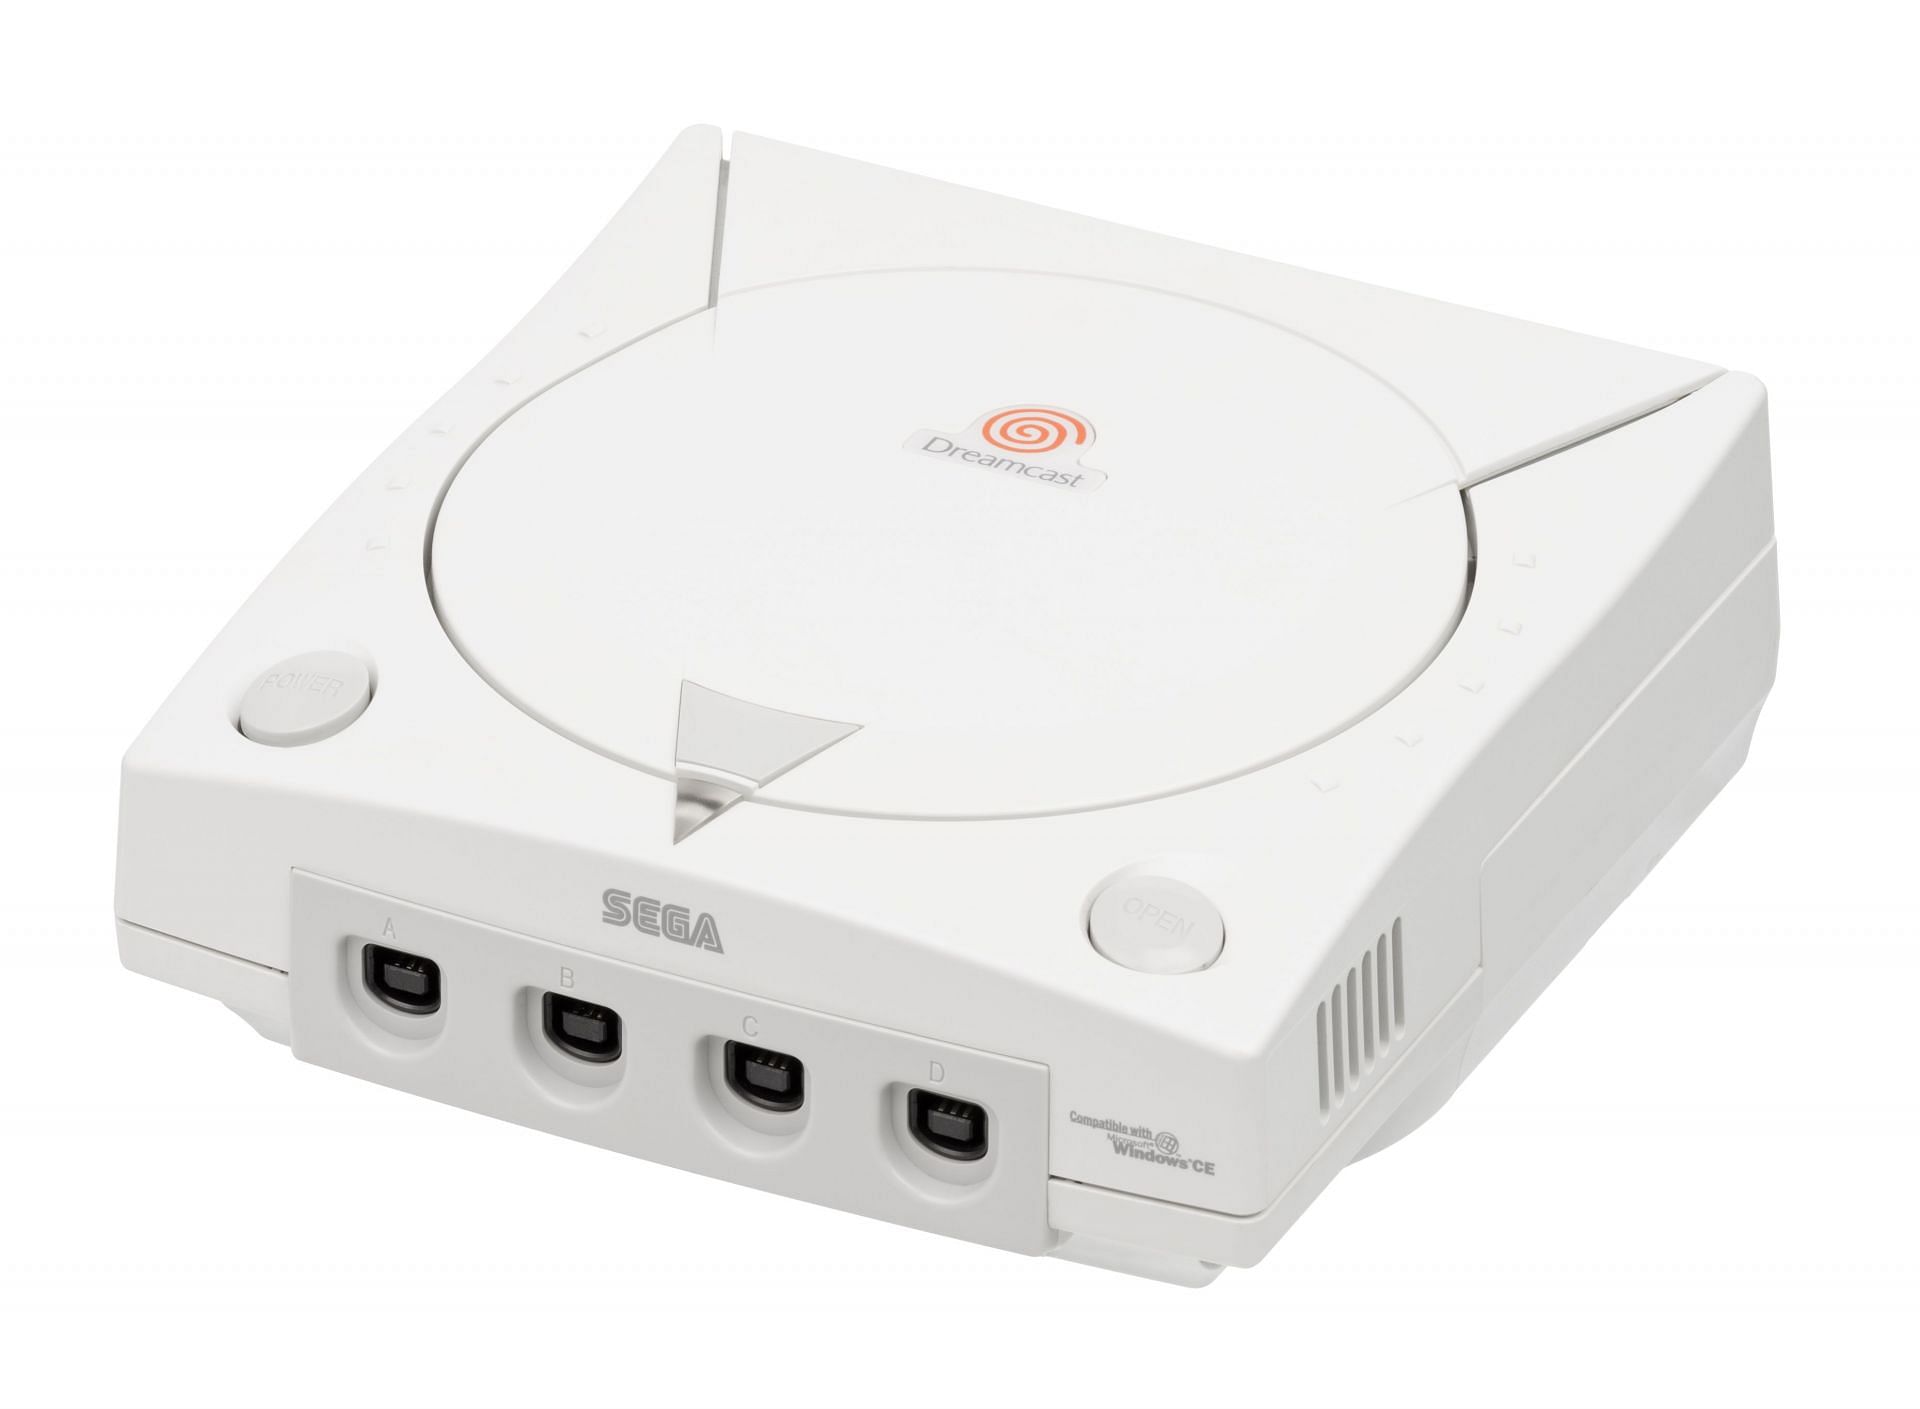 Sega Dreamcast (Image via Wikipedia)